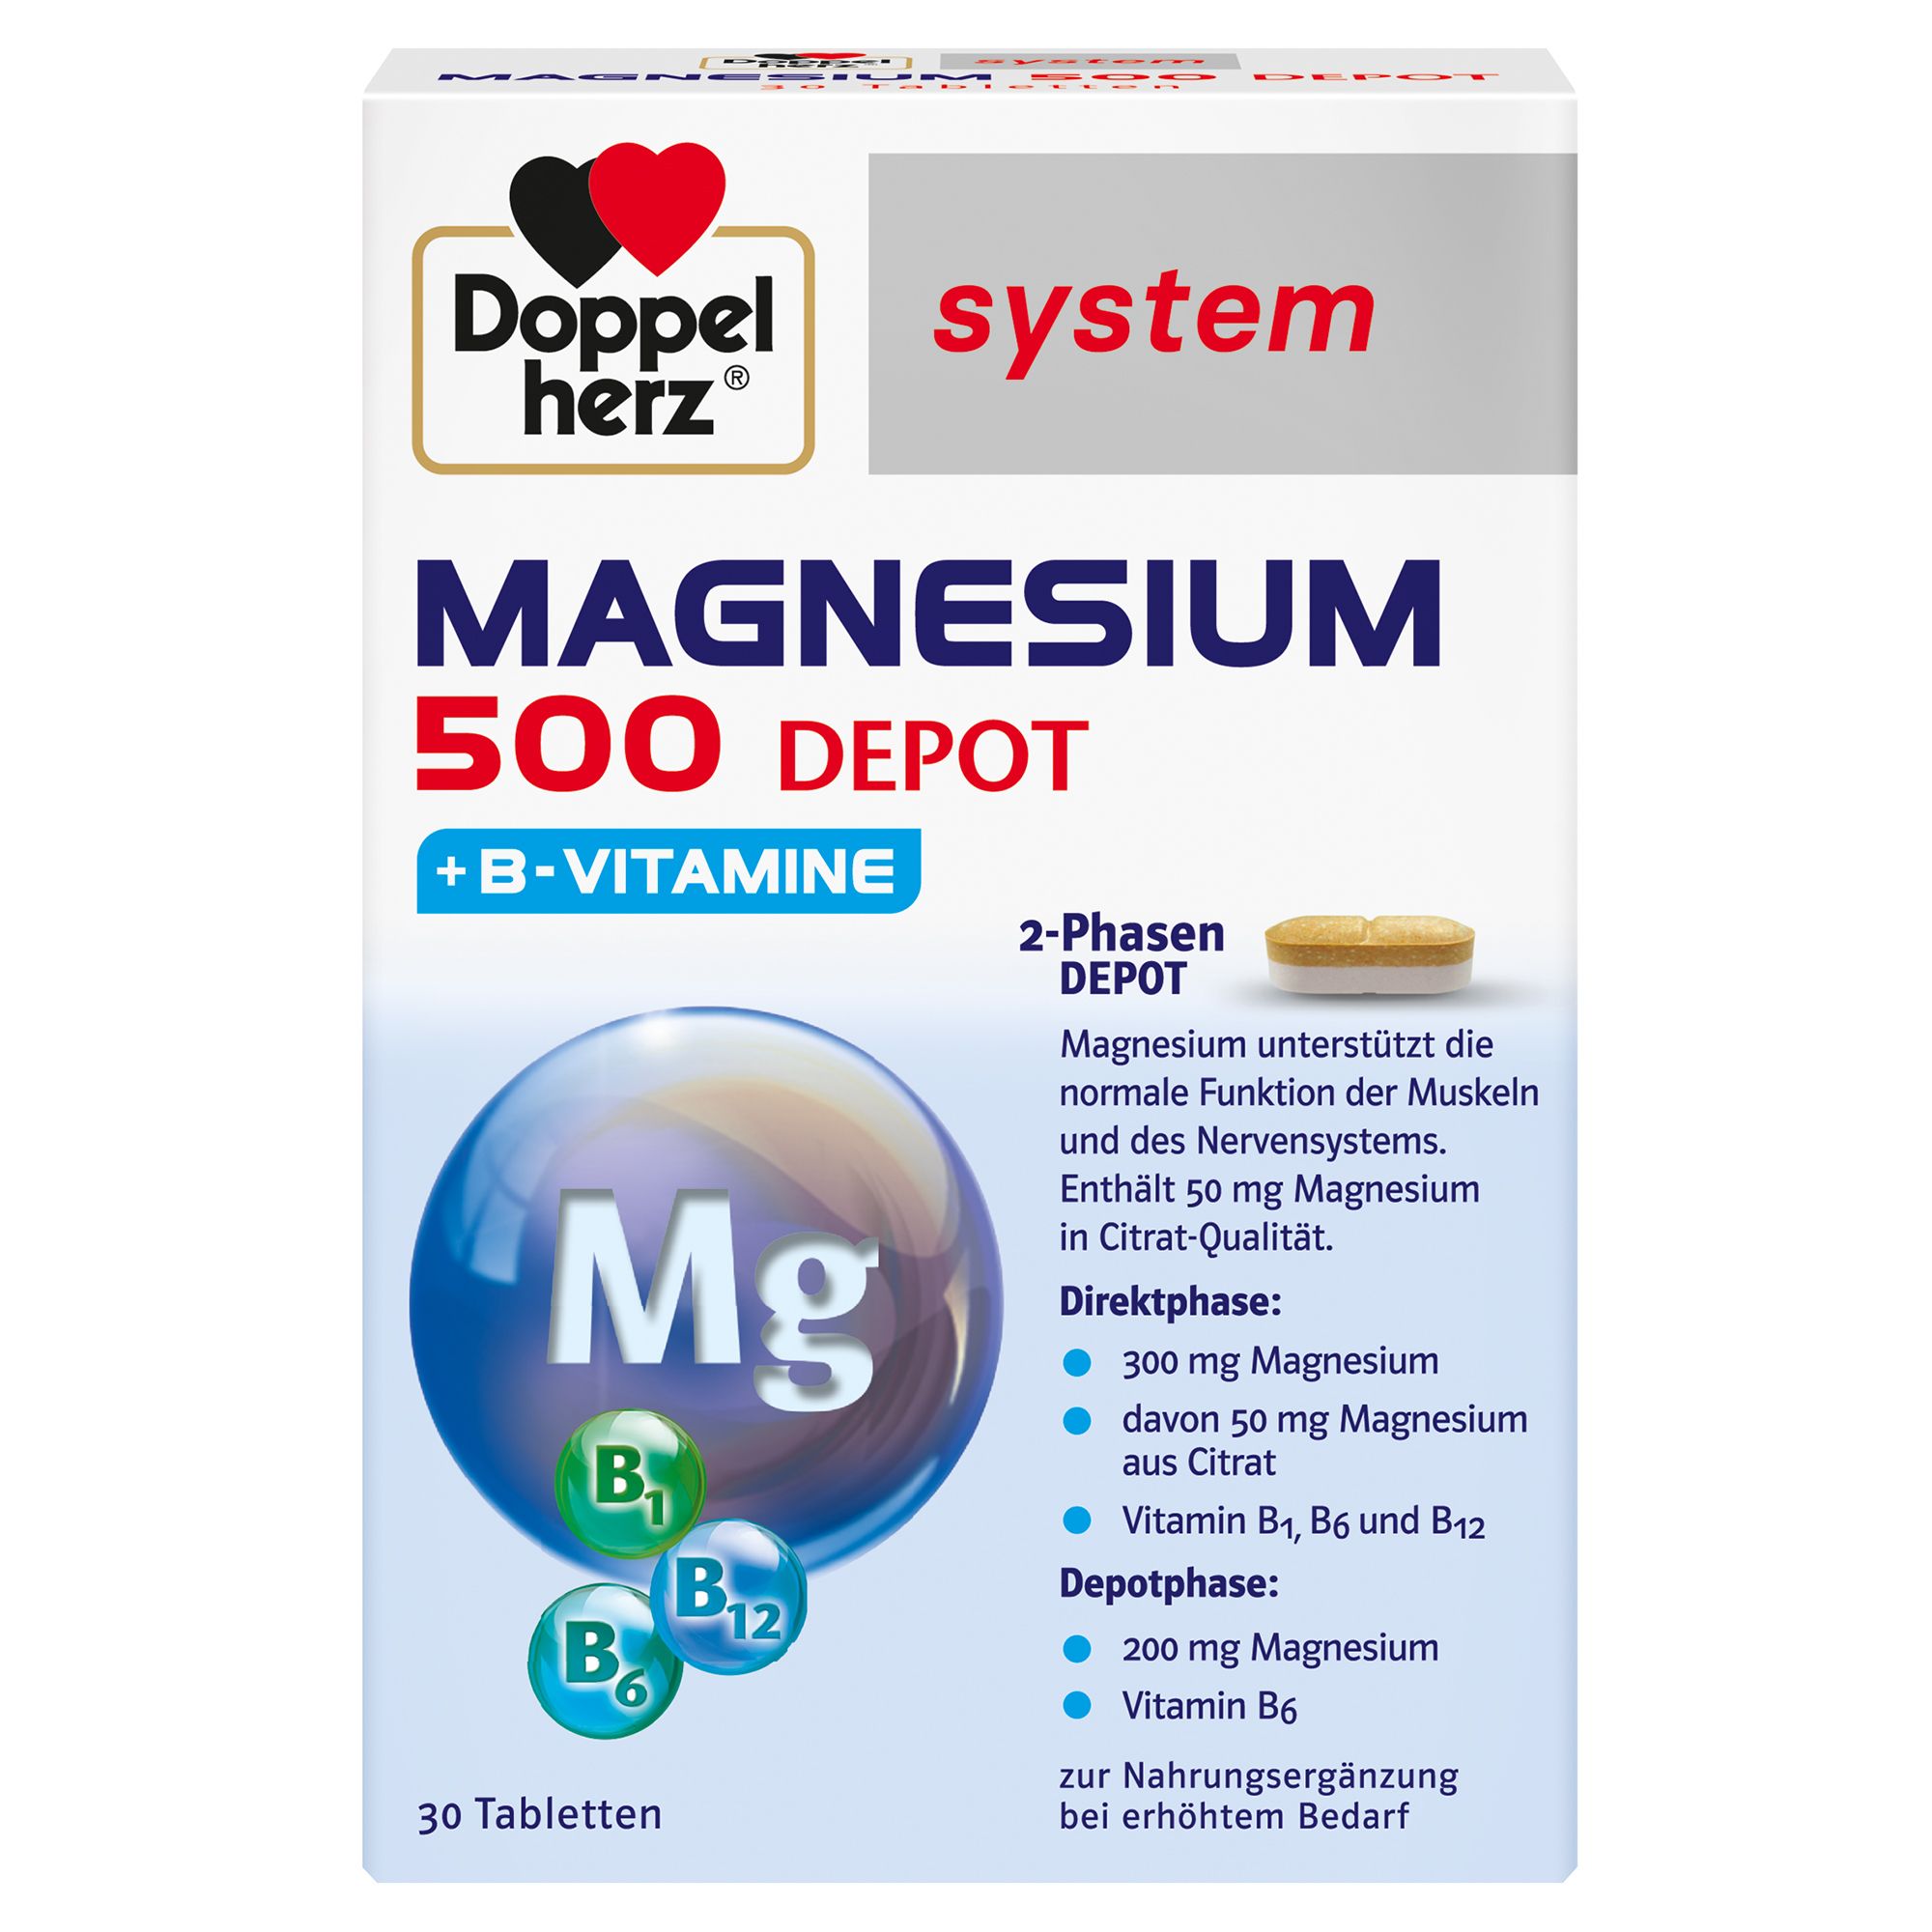 Doppelherz® system Magnesium 500 Depot